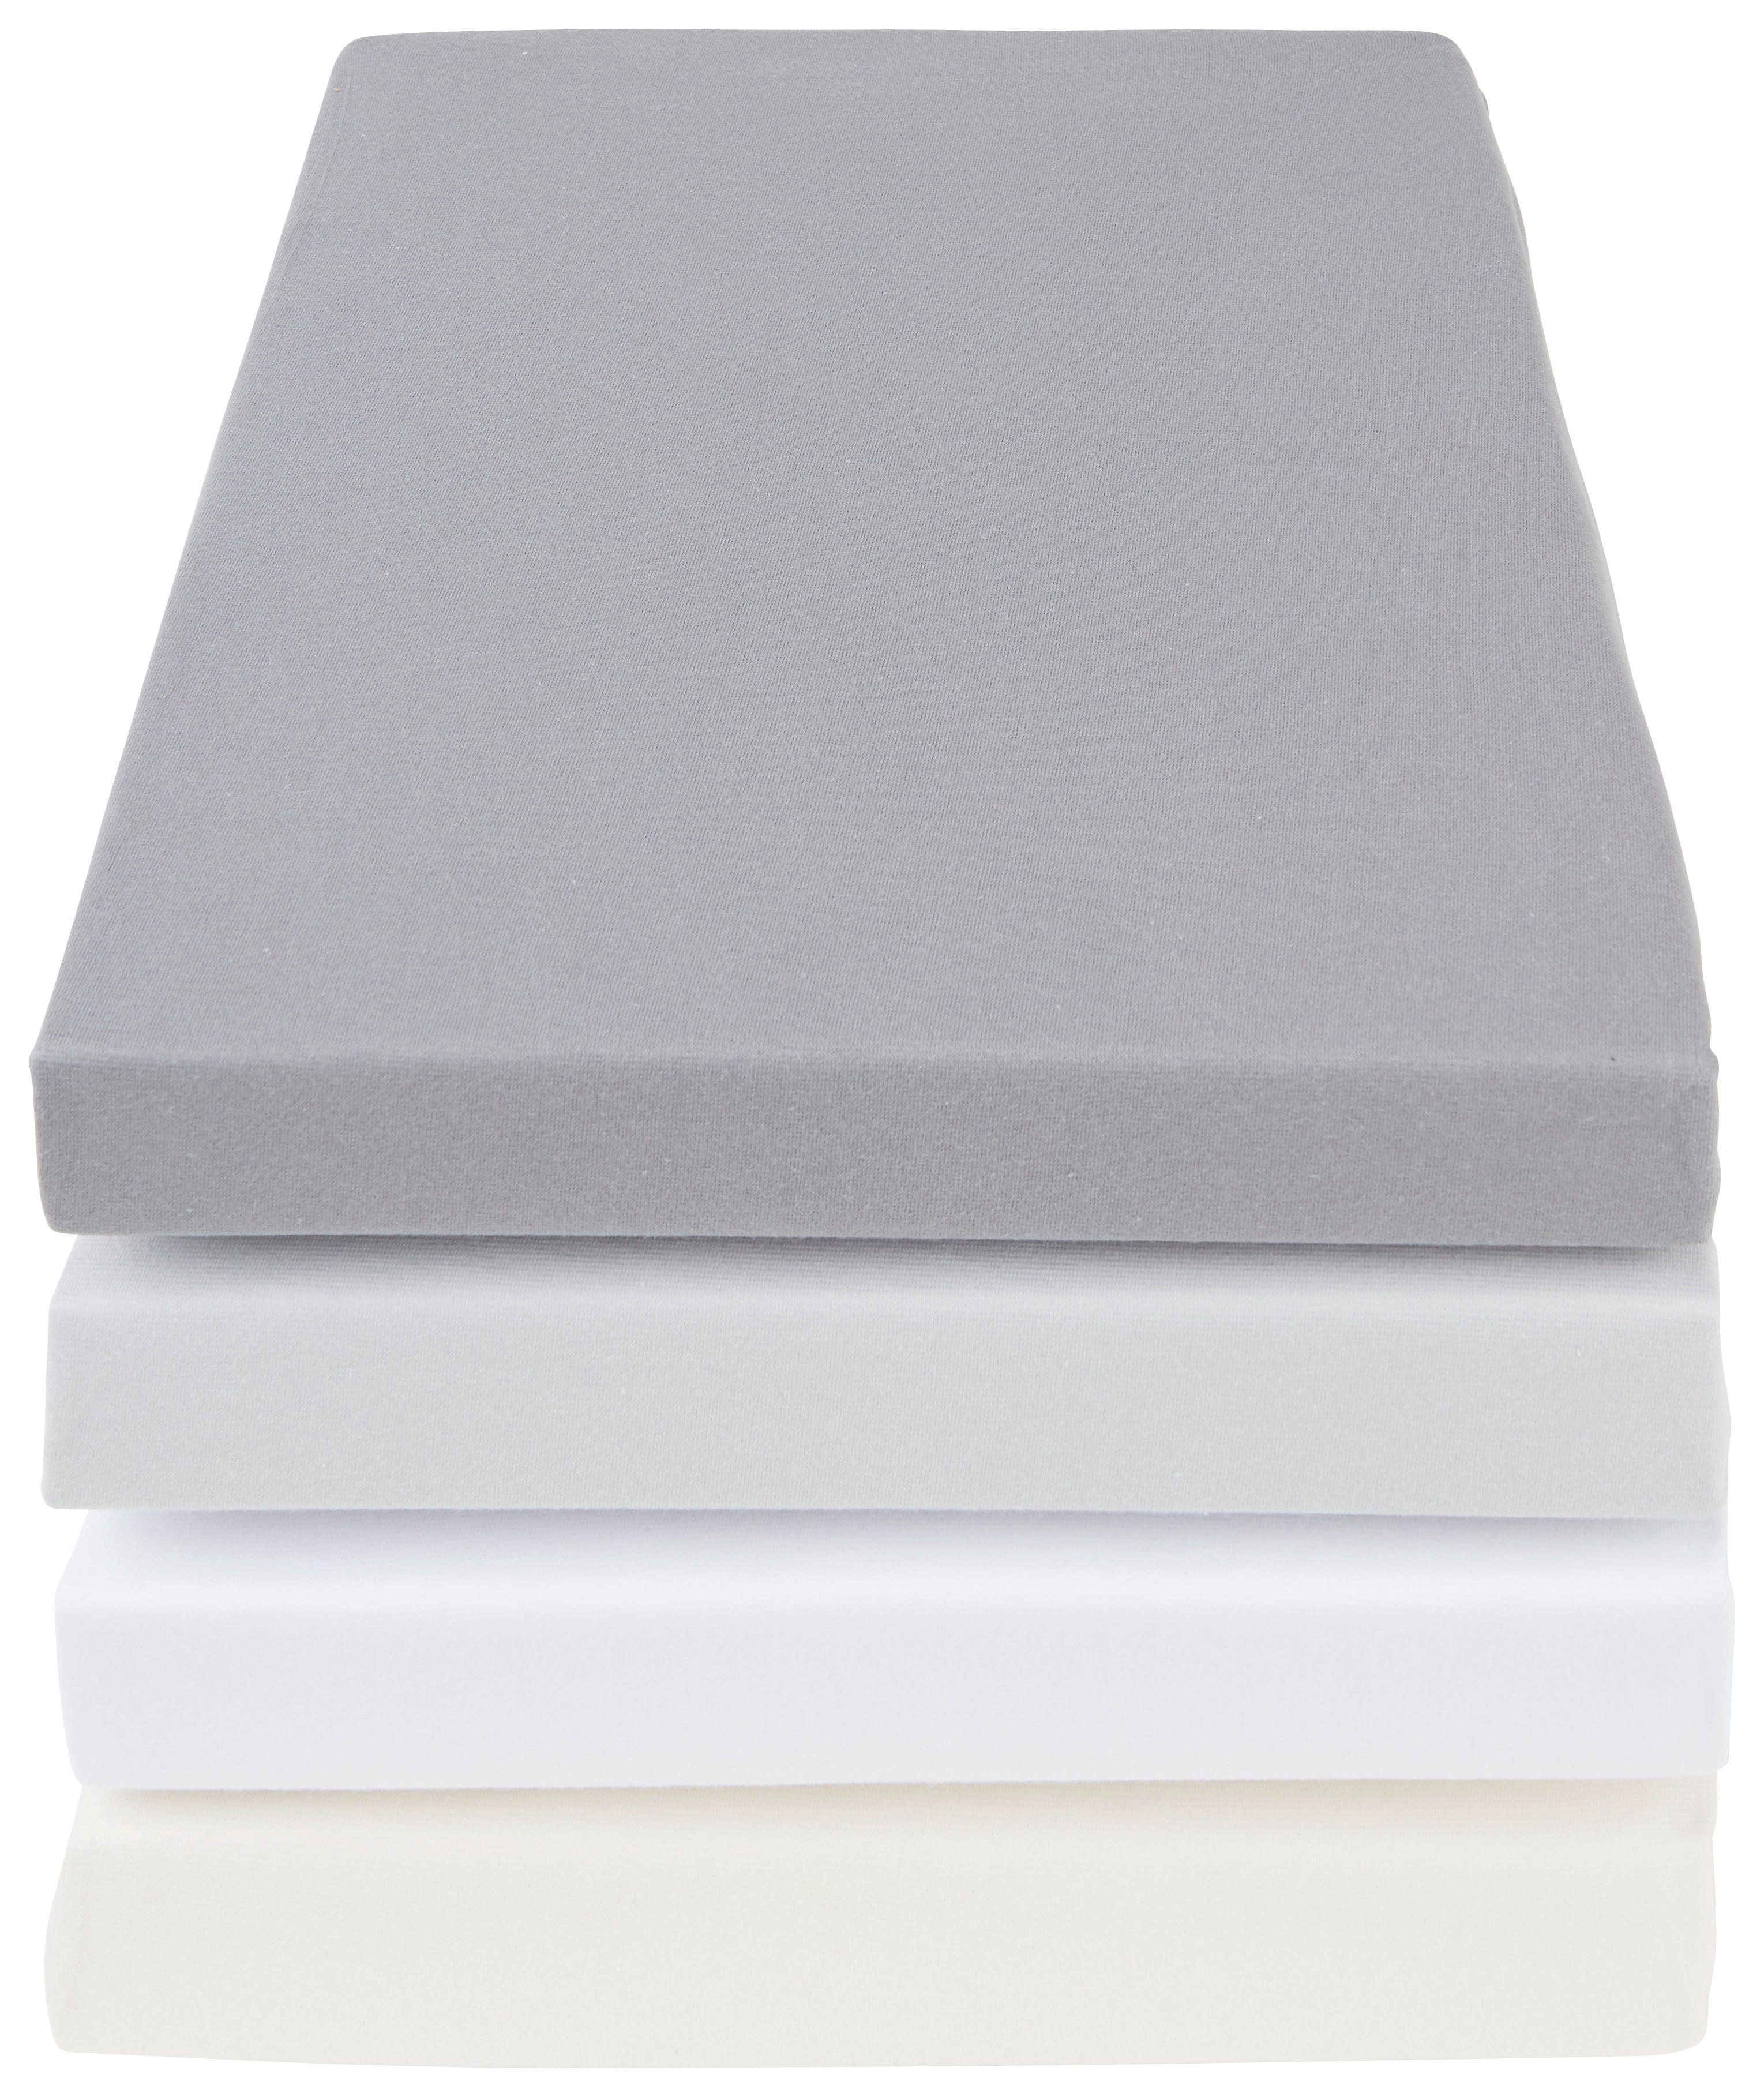 BOXSPRING-SPANNLEINTUCH 180-200/200-220 cm  - Graphitfarben/Weiß, Basics, Textil (180-200/200-220cm) - Novel